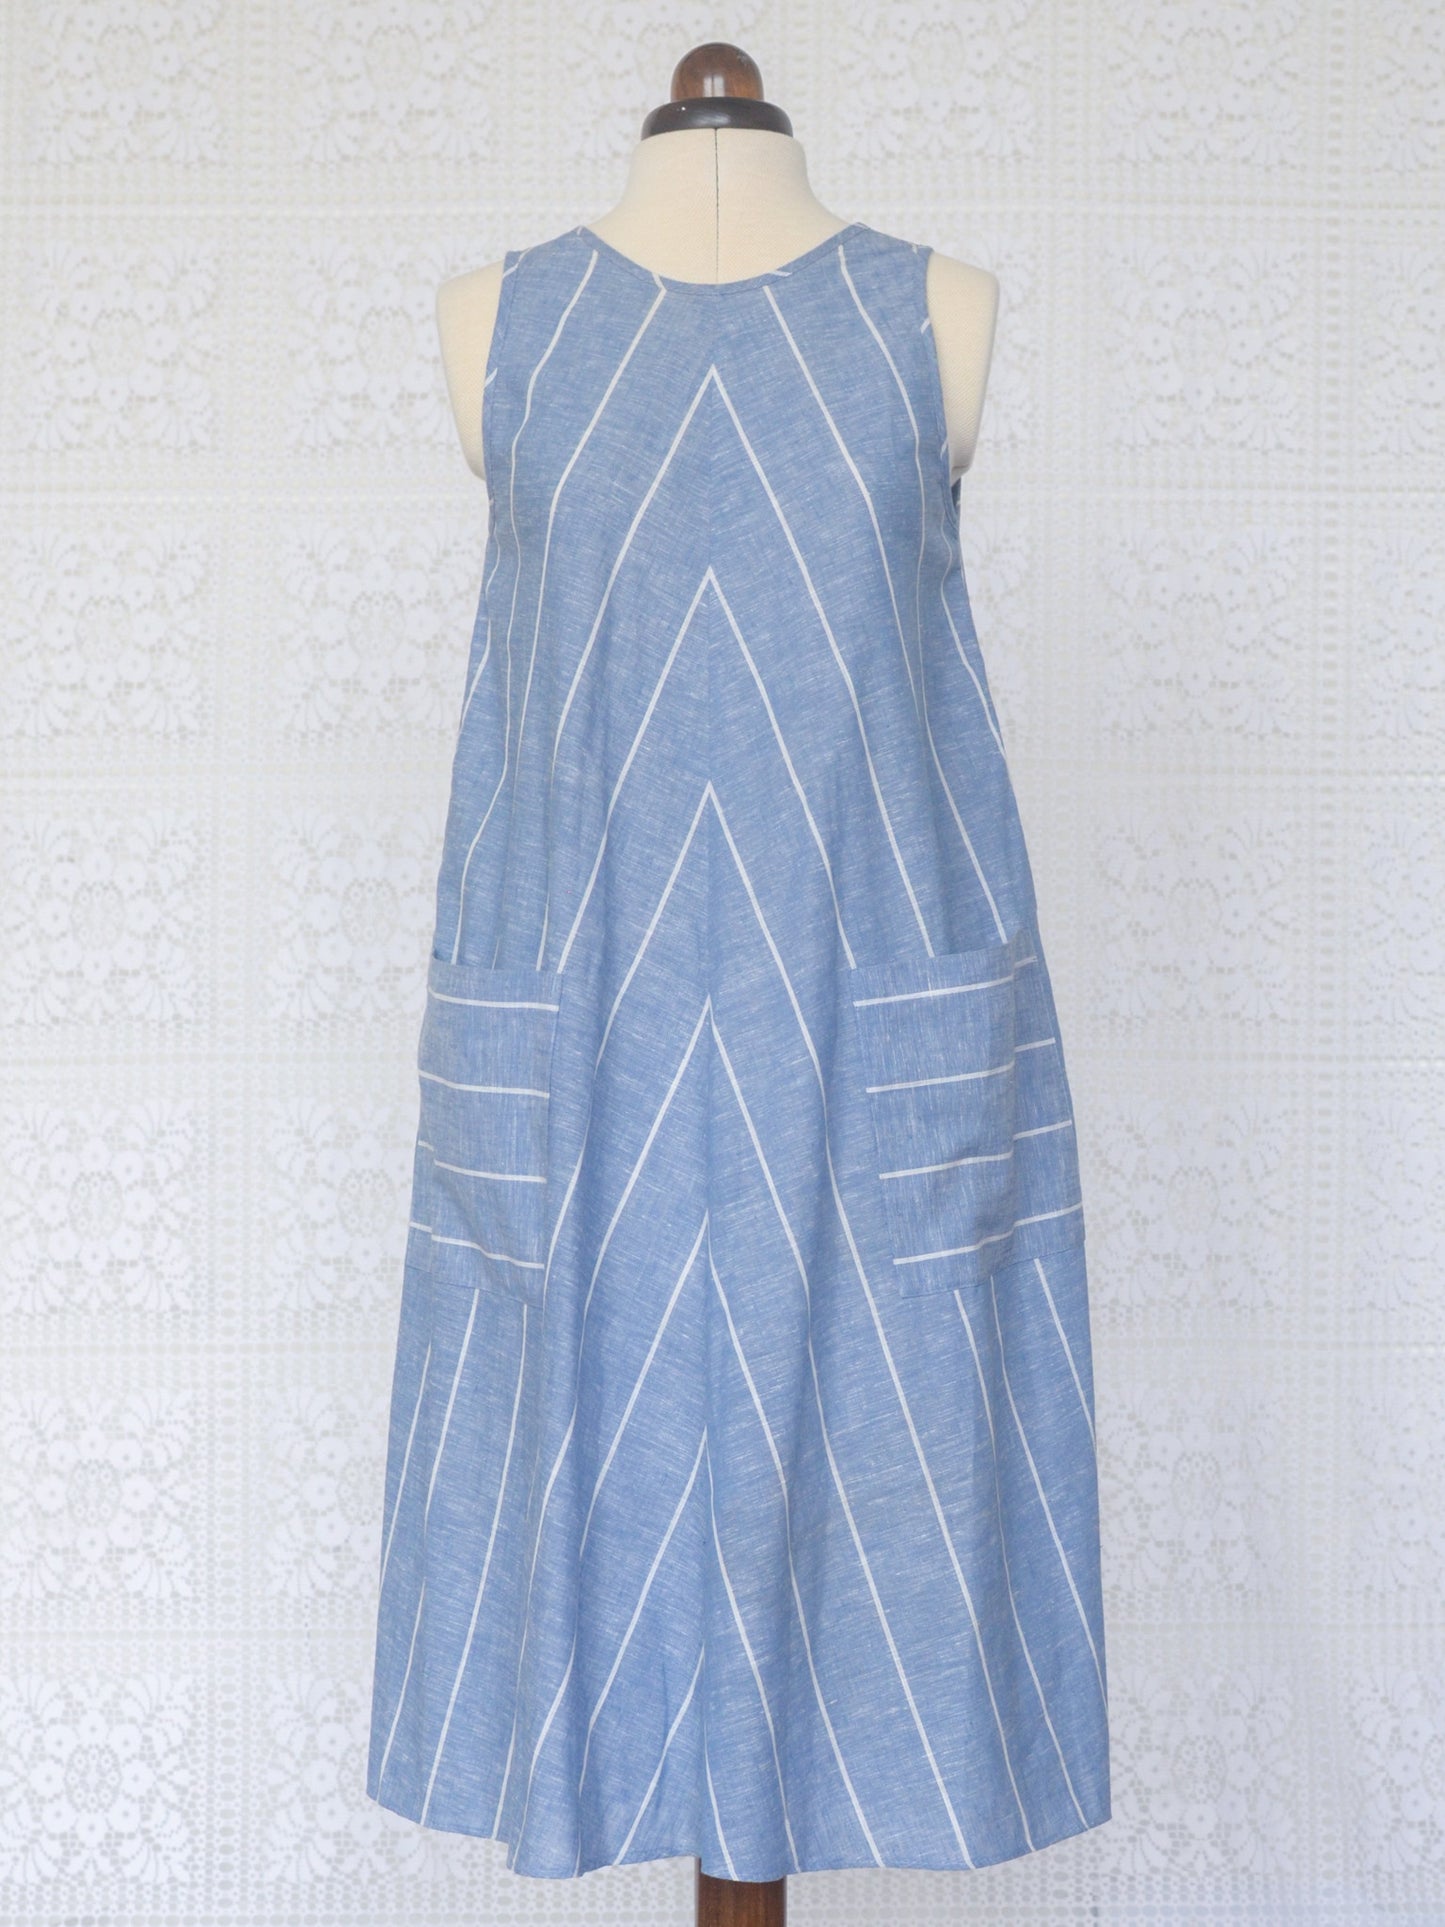 1980s St Michael light blue chambray and white chevron sleeveless sun dress